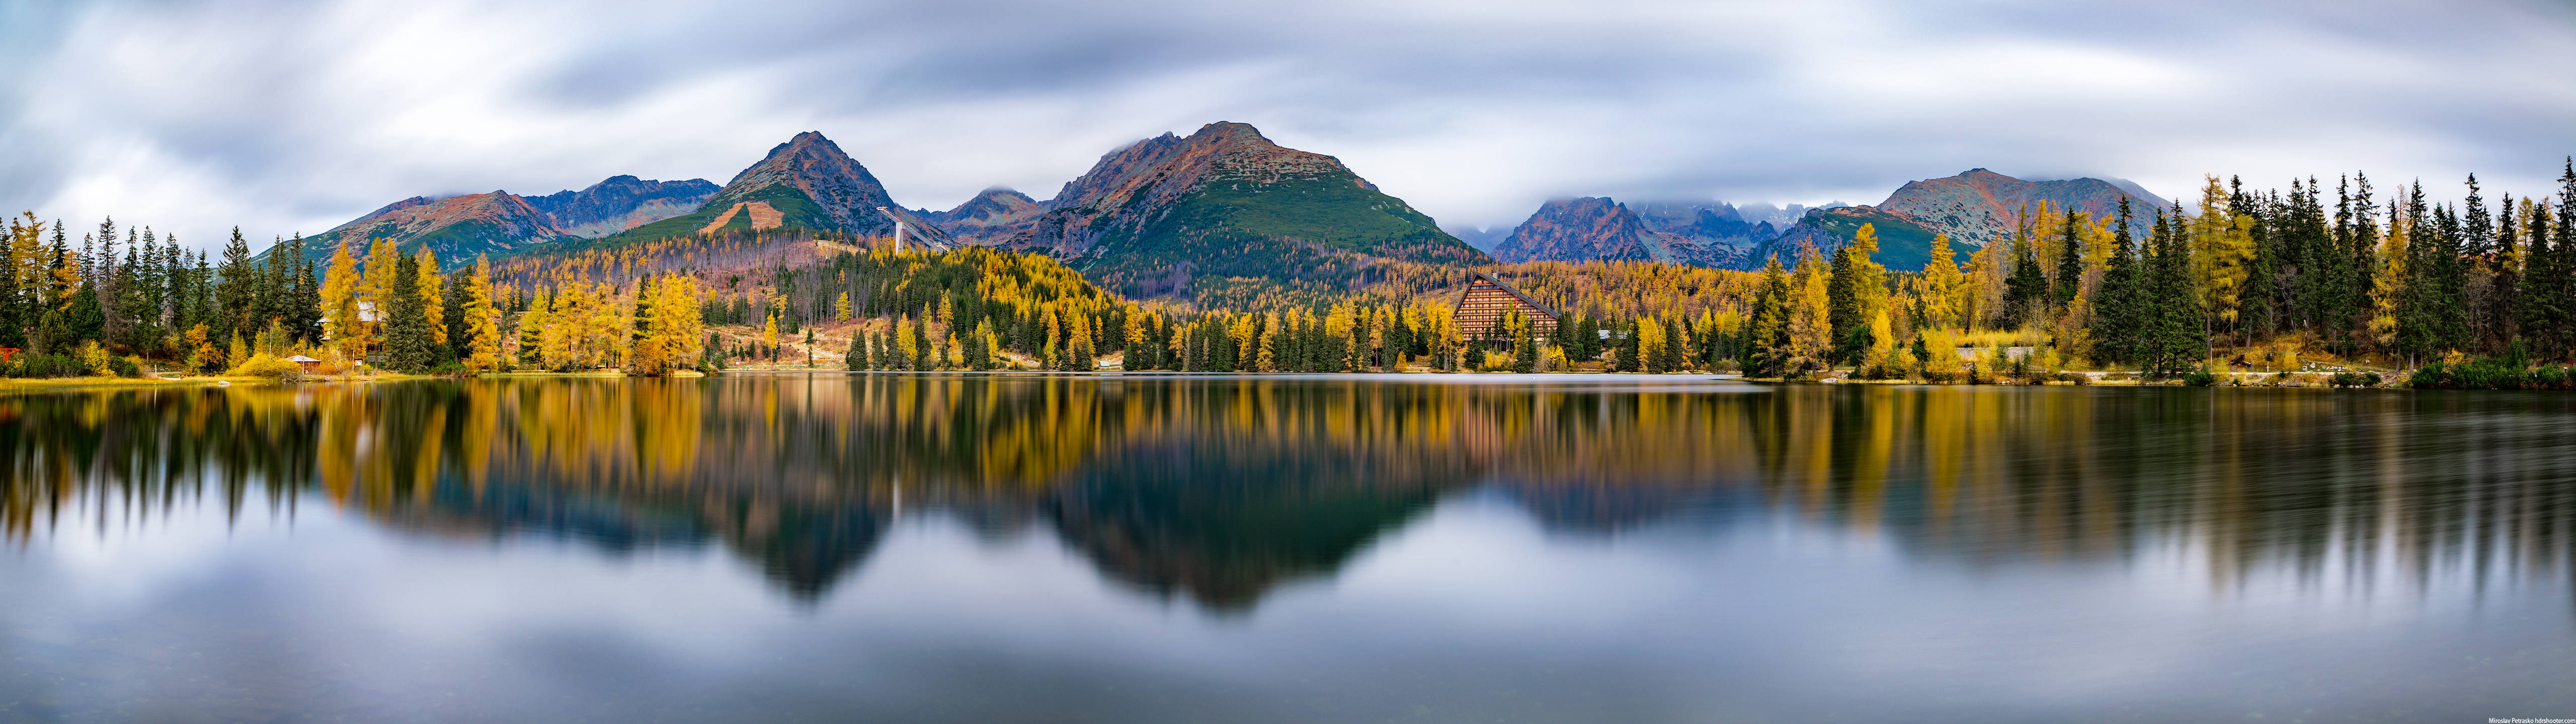 Lake Reflection 4k Ultra Widescreen Background